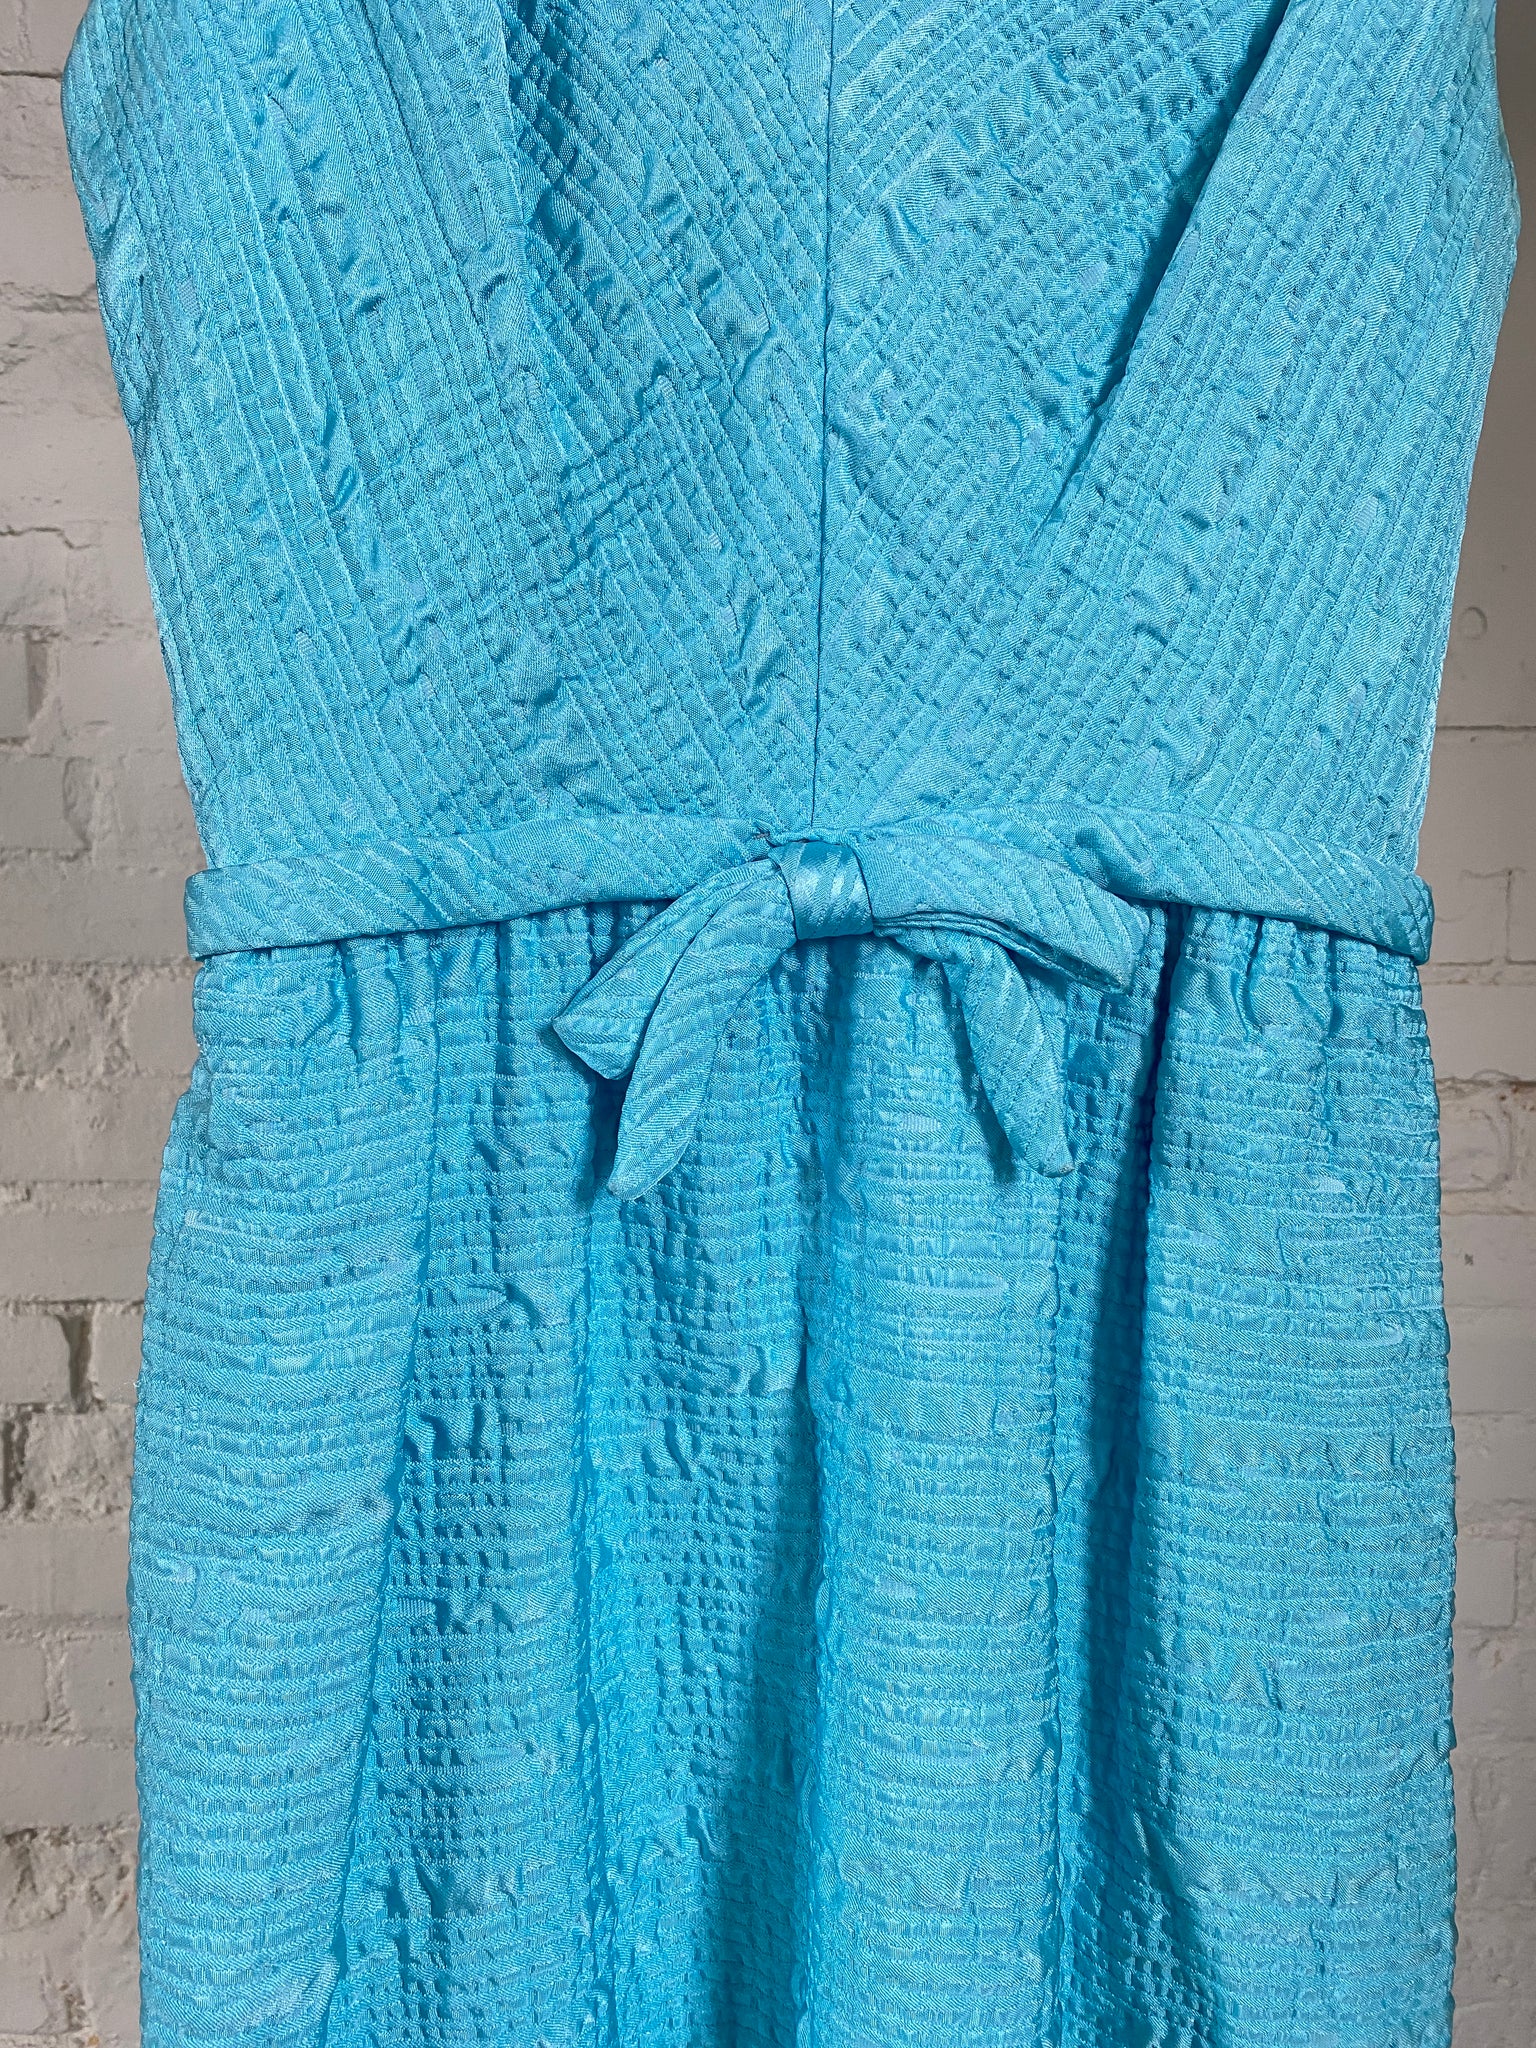 Vintage Adrian Light Blue Dress and Jacket Set (M)